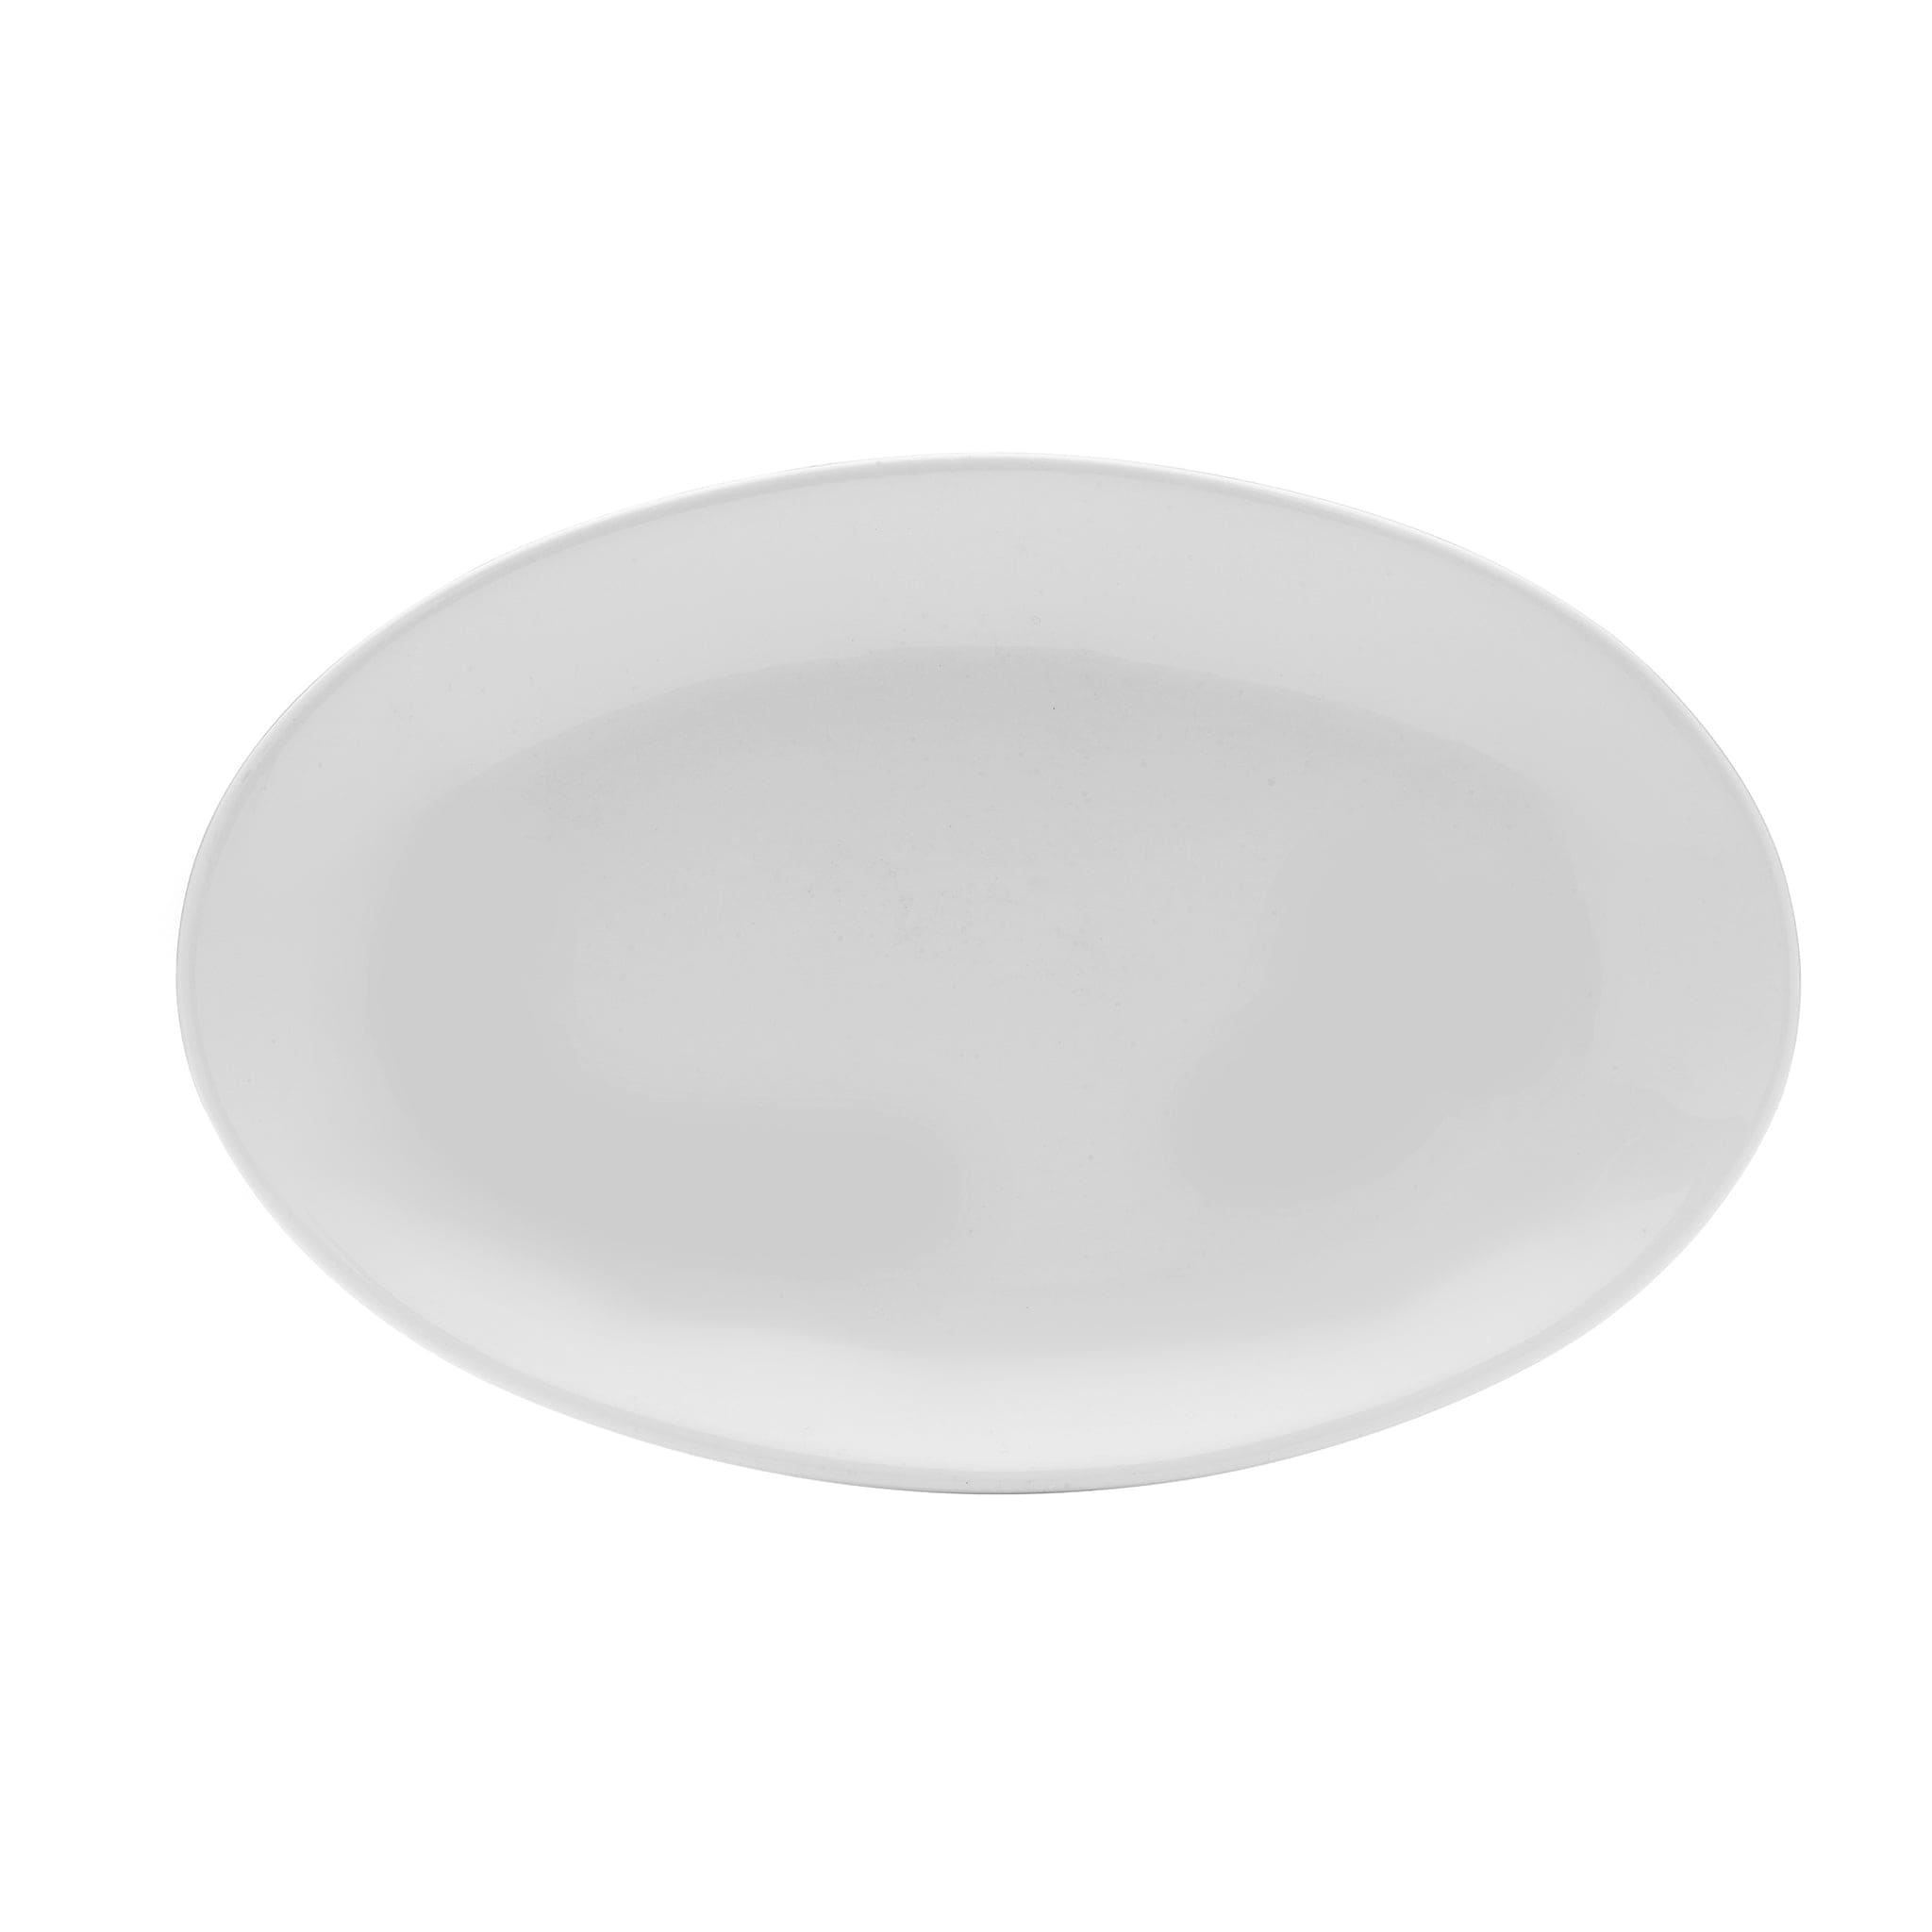 Bistro Porcelain Oval Platter 9x6" White